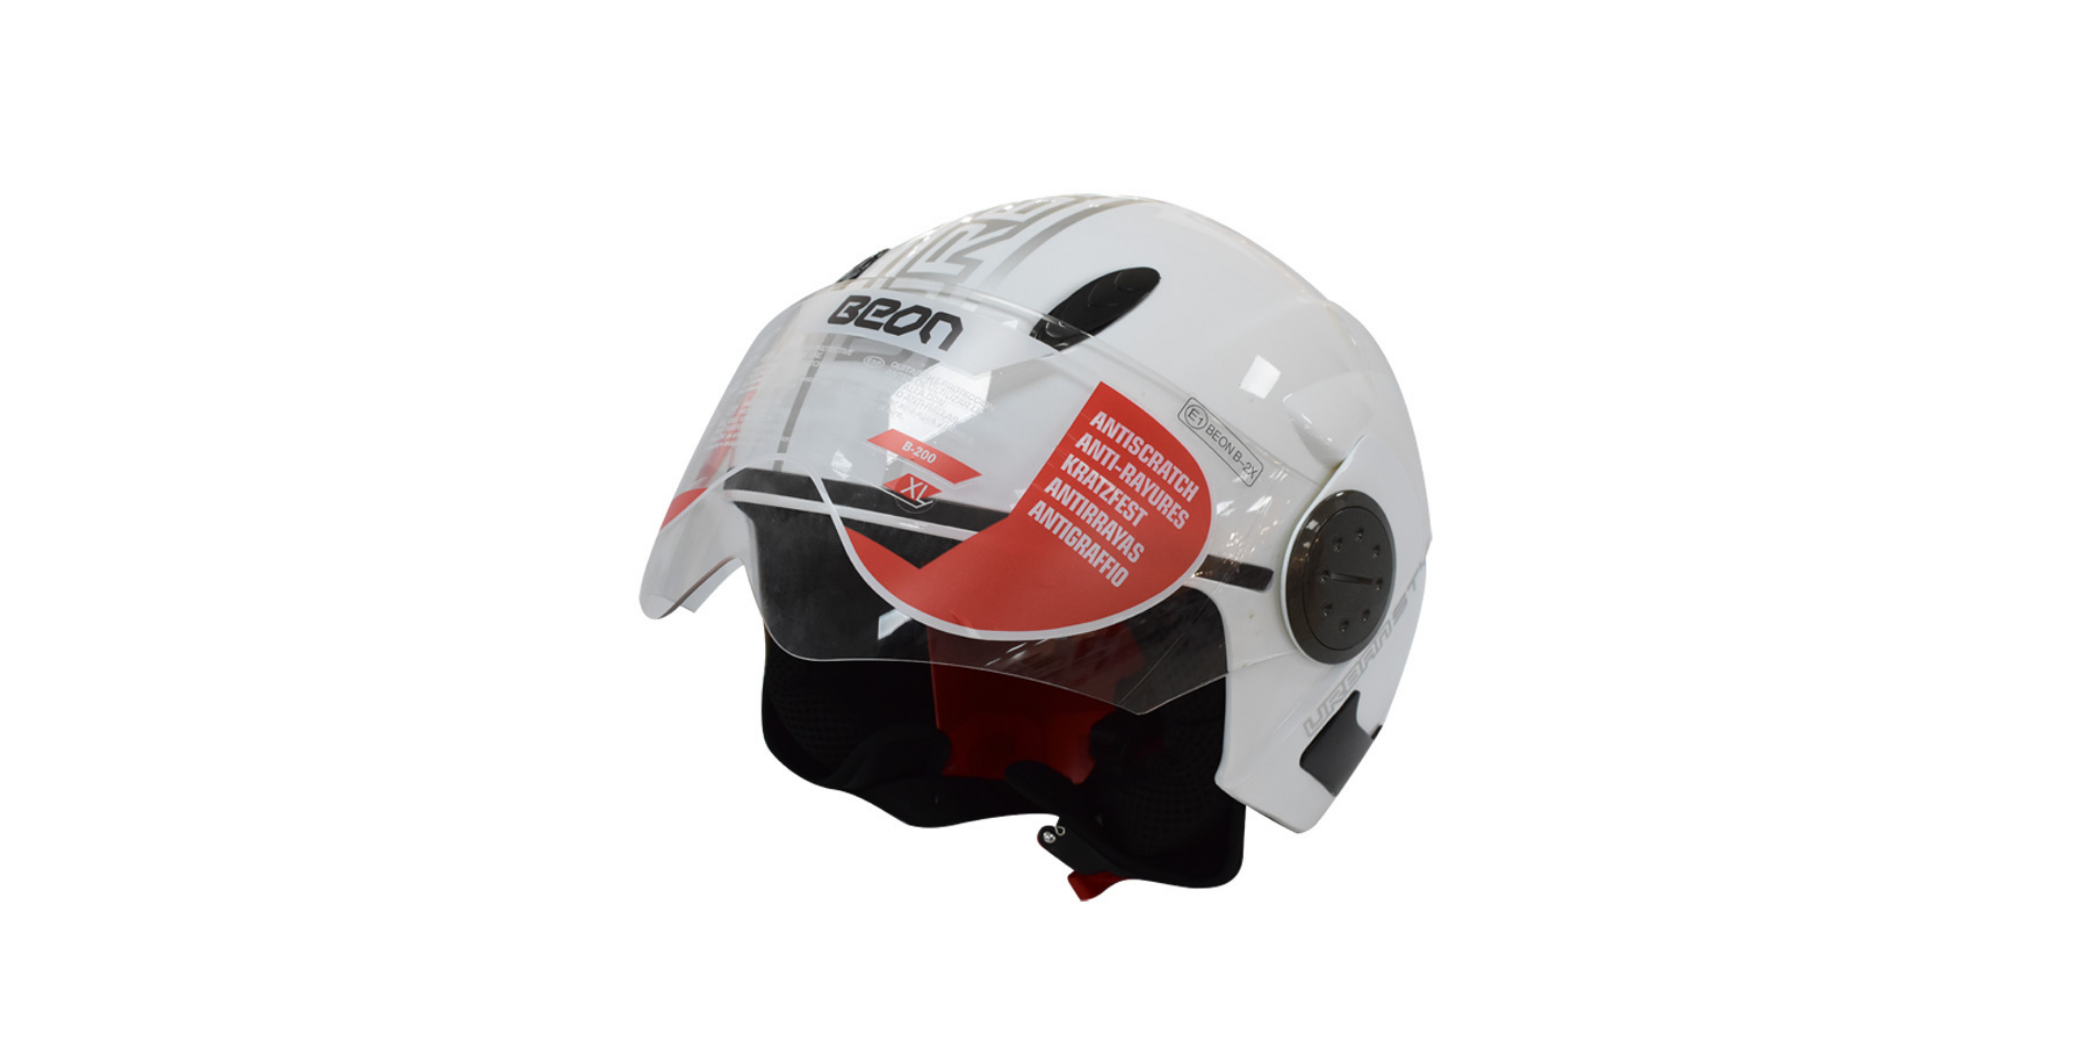 Beon B200 White Urban Style Helmet